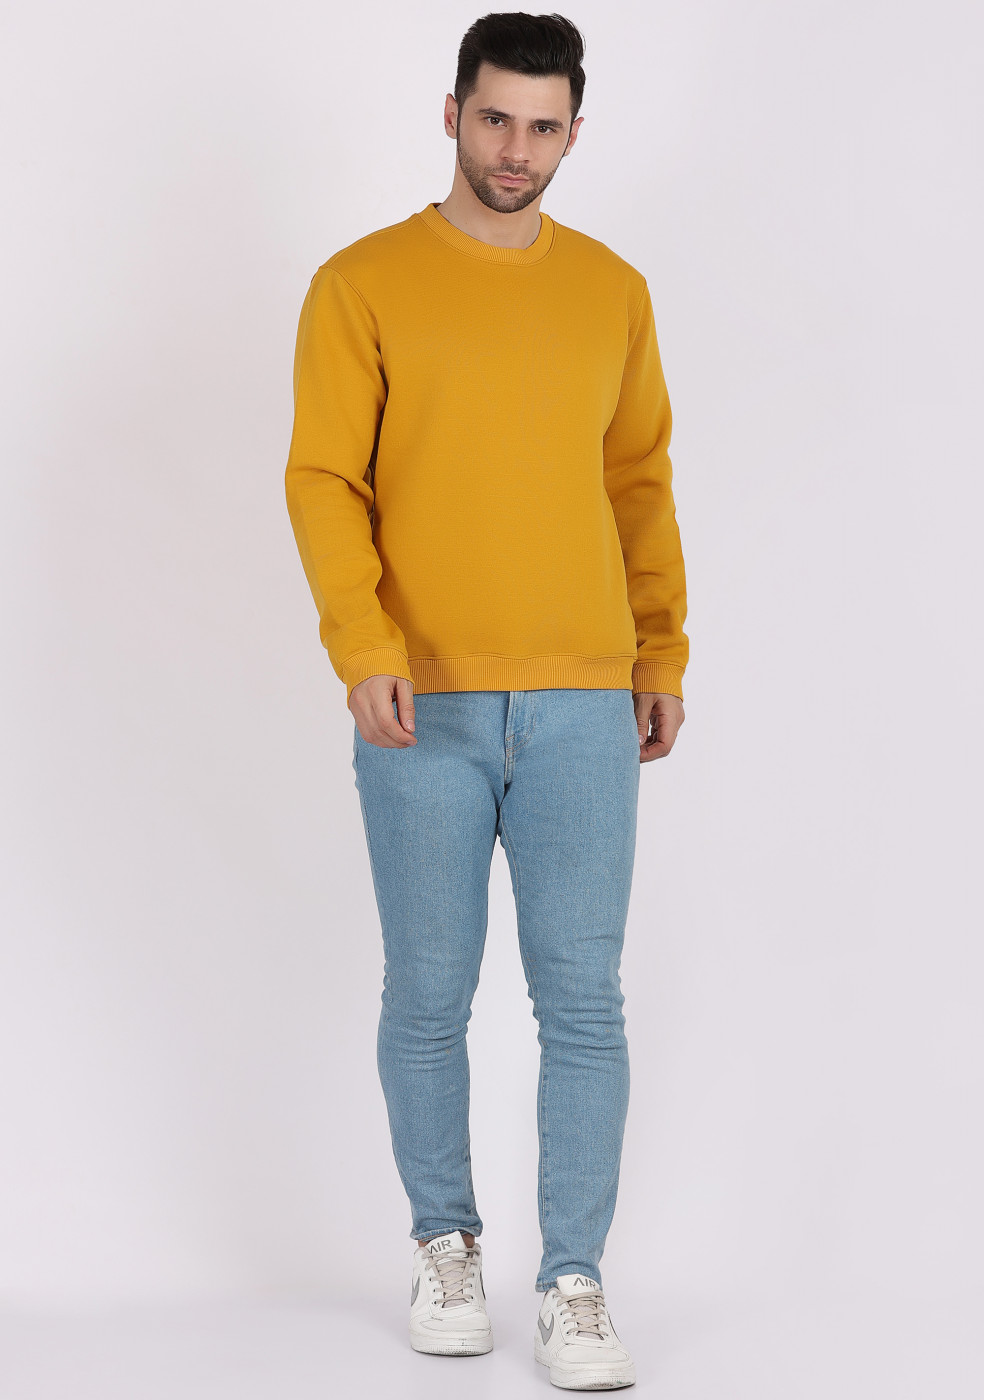 HUKH Mustard Color Sweatshirt For Men